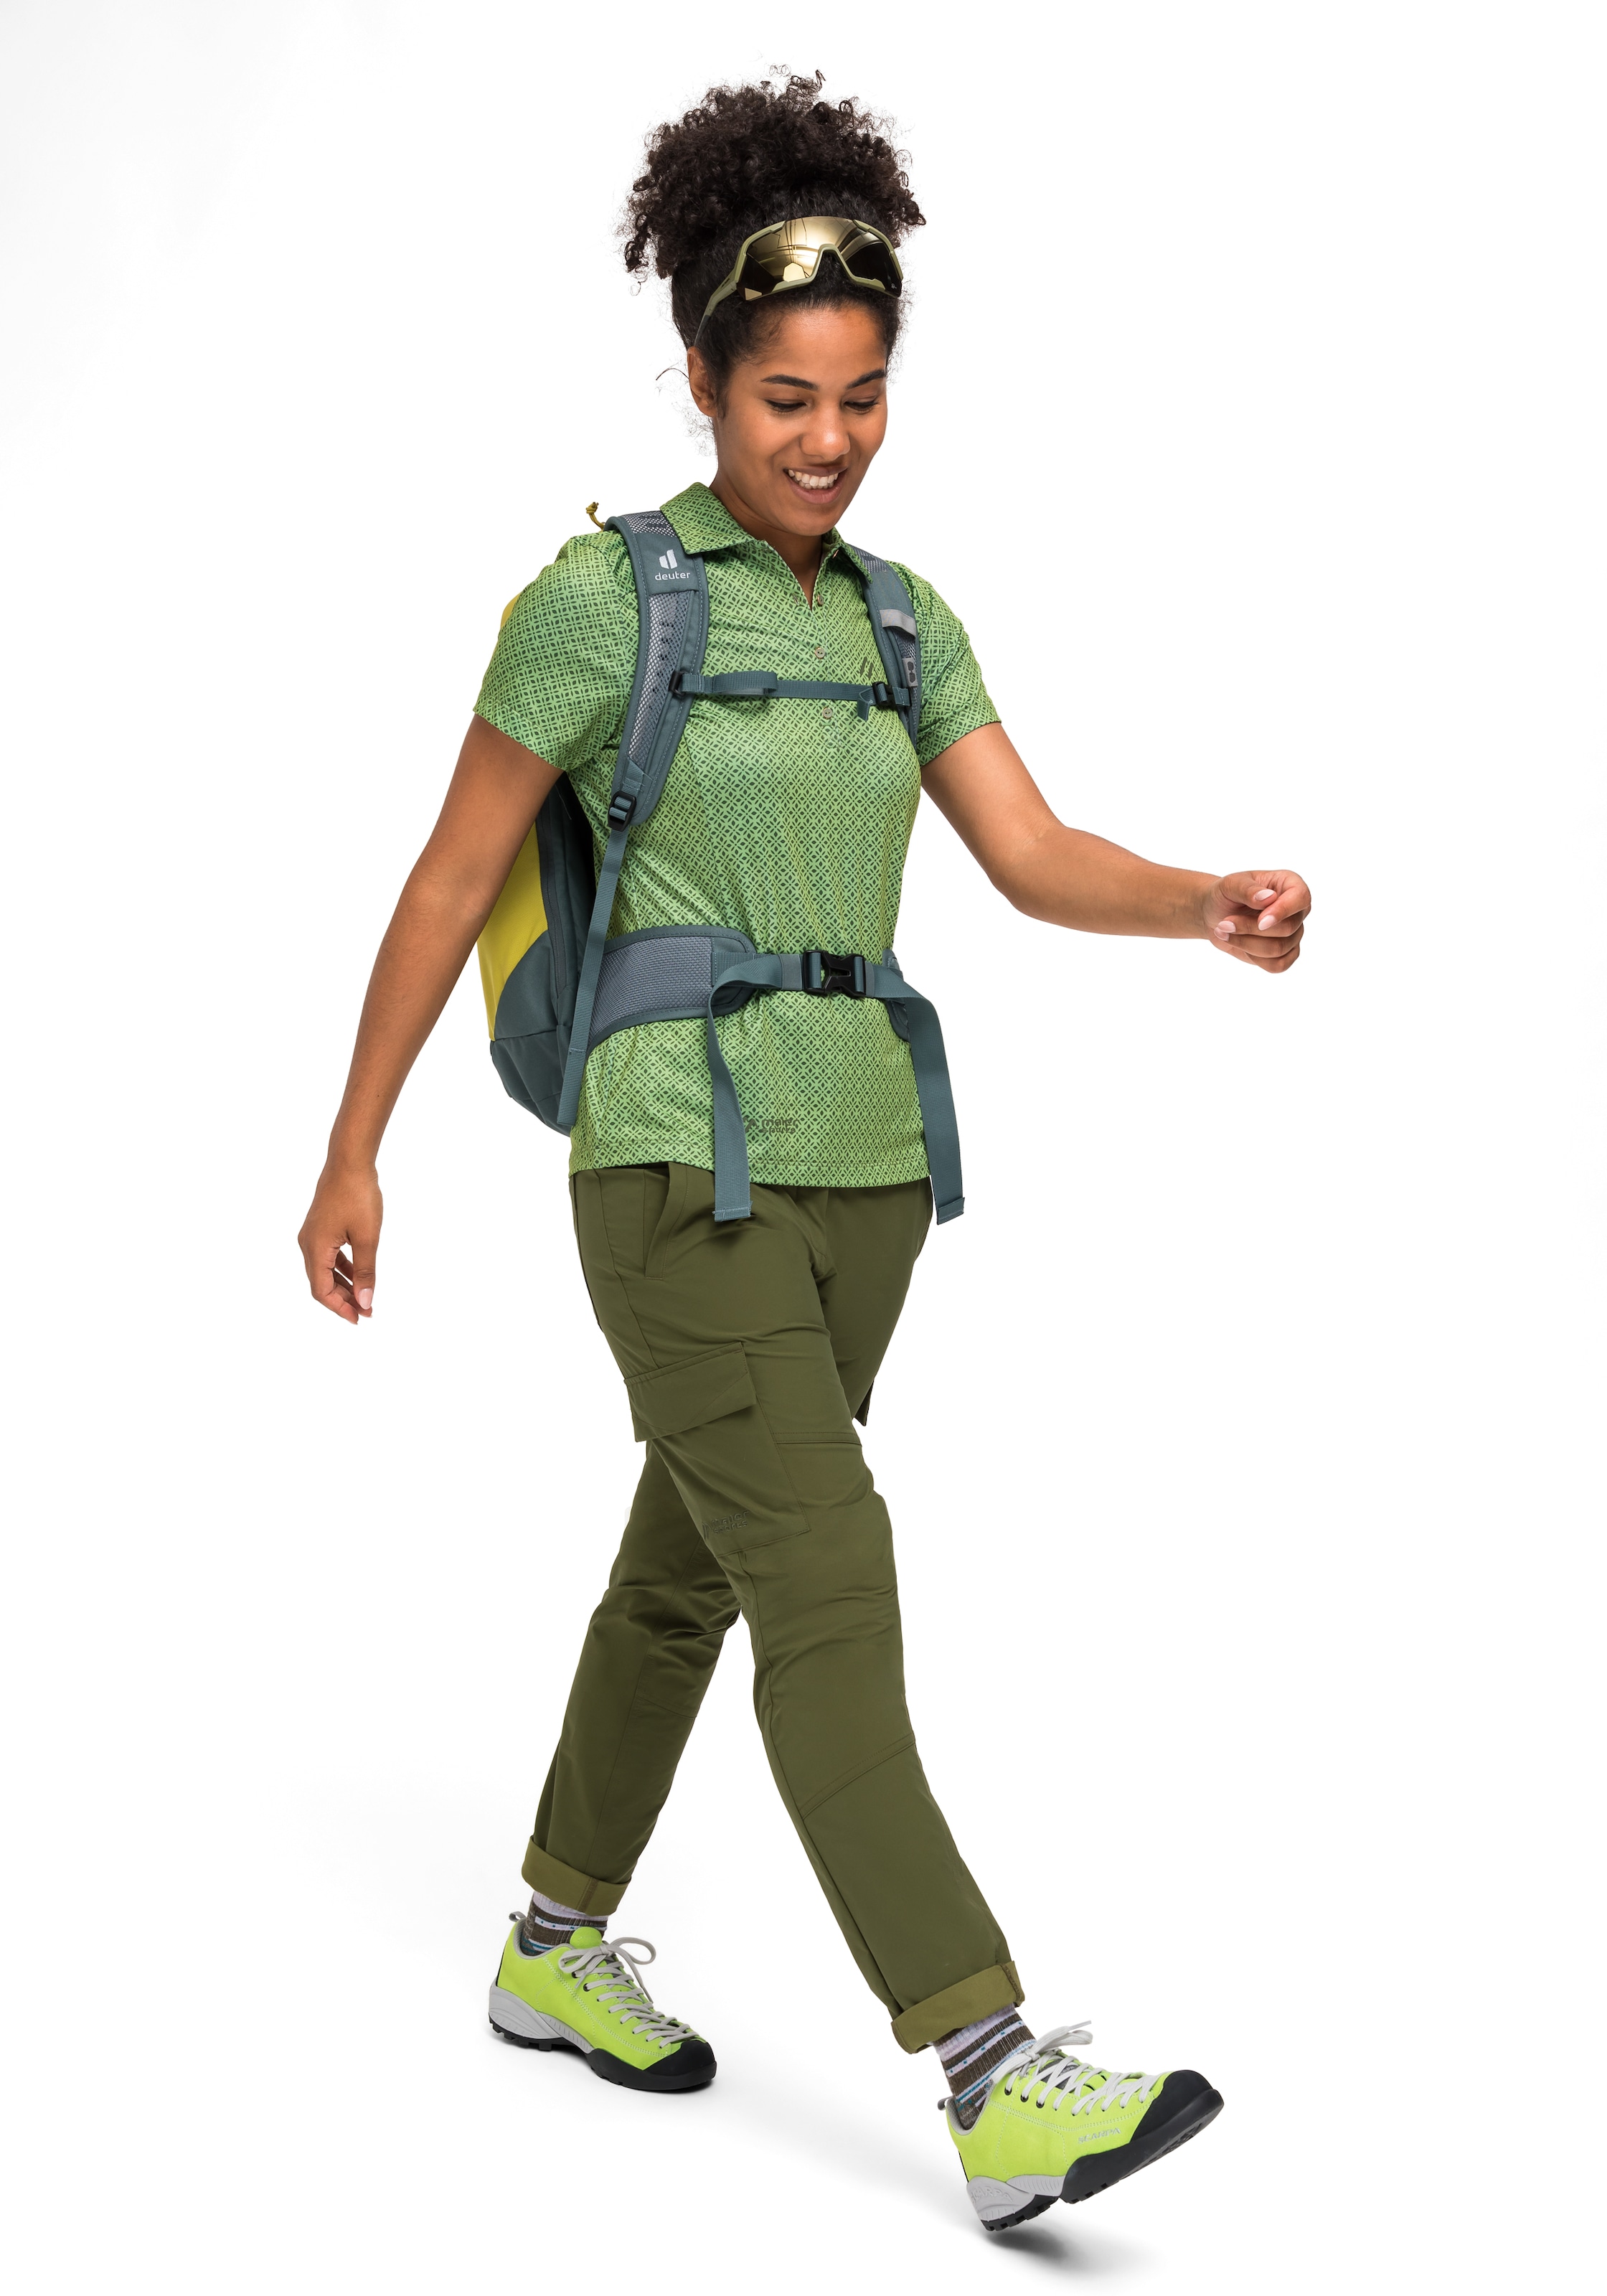 Maier Sports Cargohose »Fenit W«, Damen Cargohose, lange Outdoor-Hose, ideal als Wanderhose oder Trekkinghose